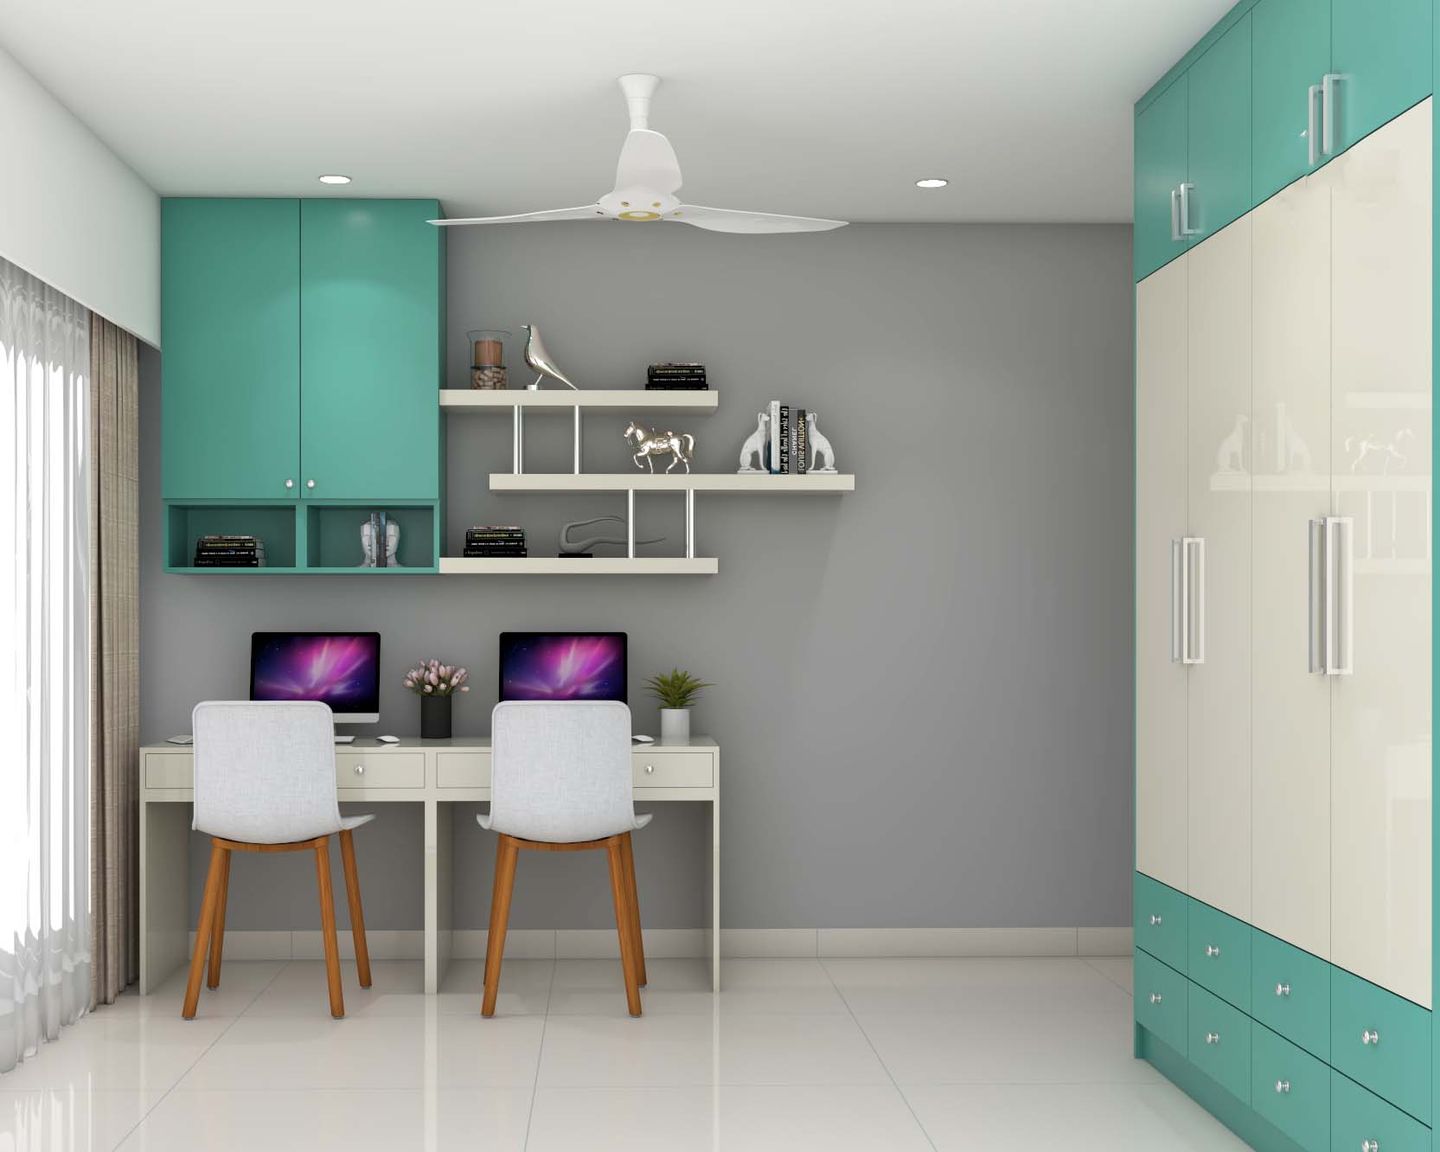 Contemporary Study Room Design In Aqua Green And Frosty White - Livspace